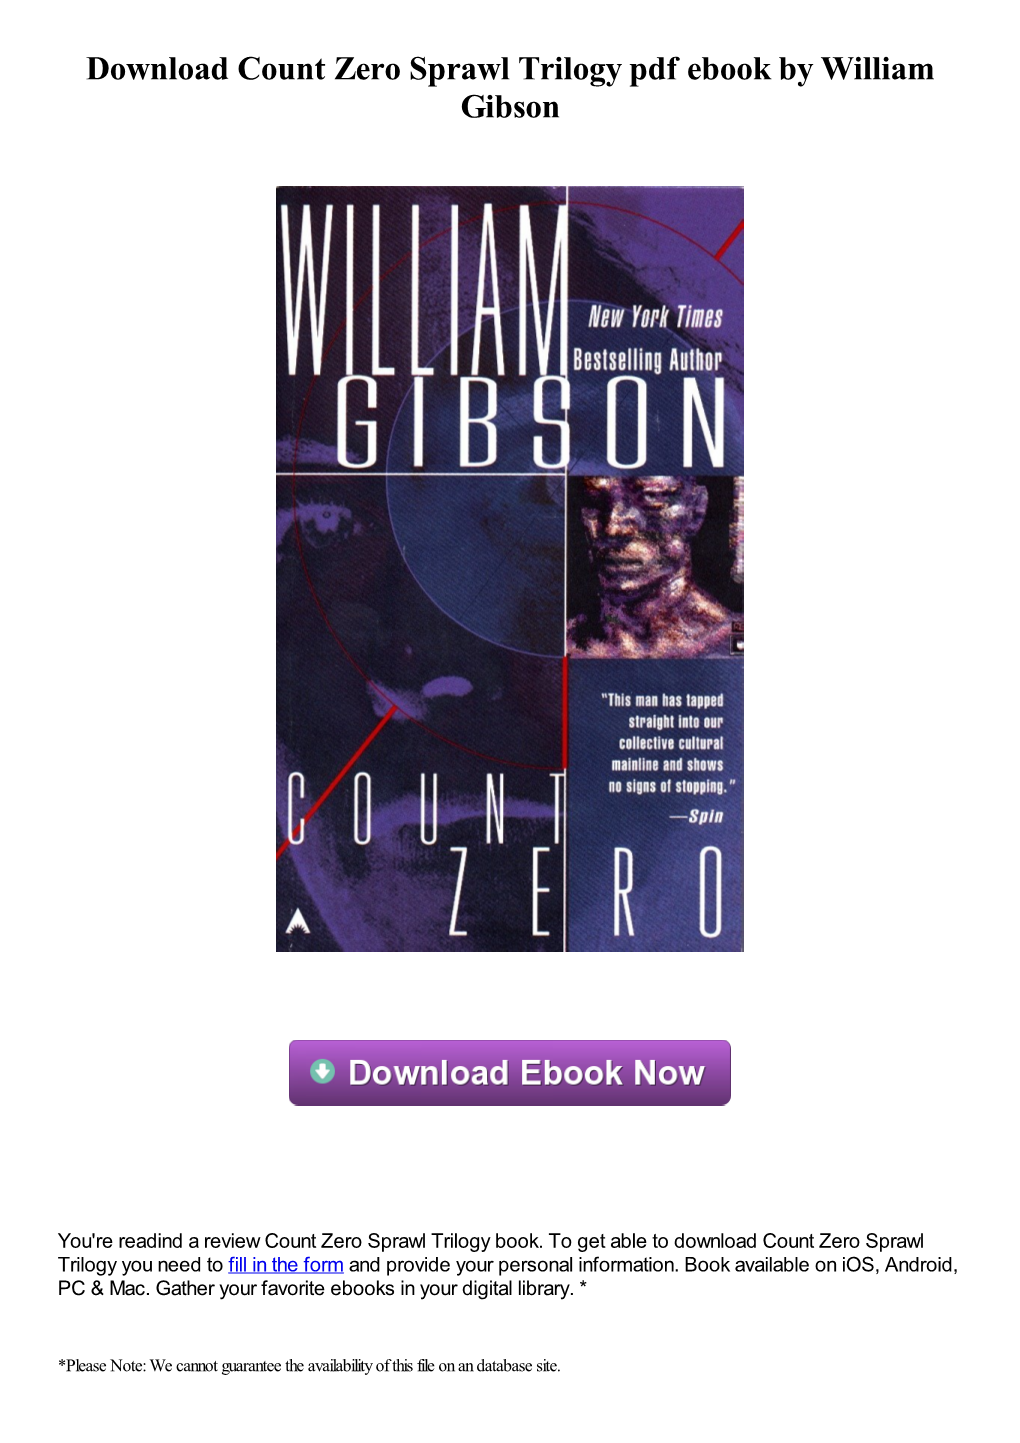 Download Count Zero Sprawl Trilogy Pdf Book by William Gibson